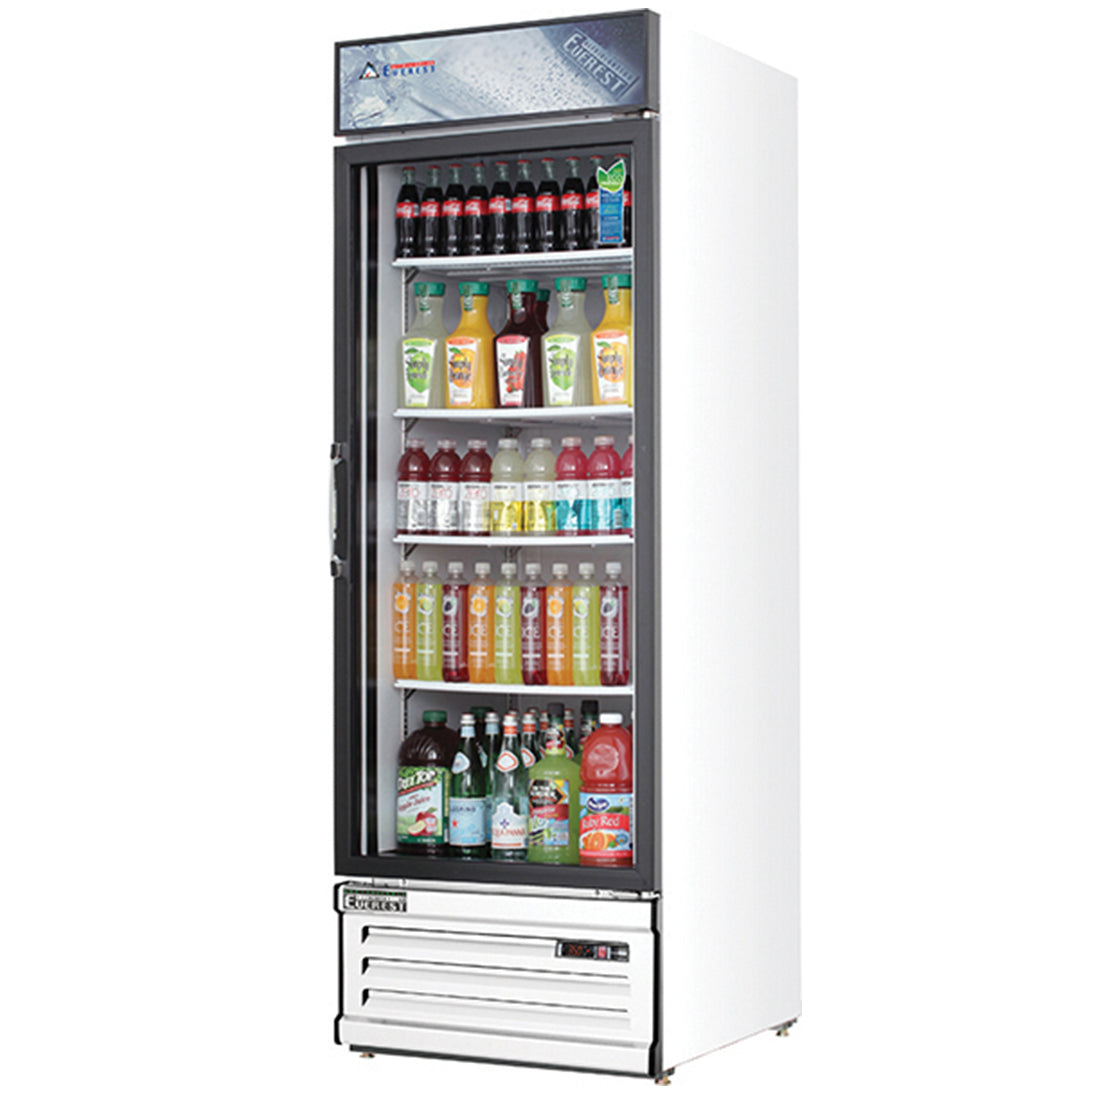 Everest EM Series-EMGR20 Single Swing Glass Door Merchandiser Refrigerator - 20 Cu. Ft.